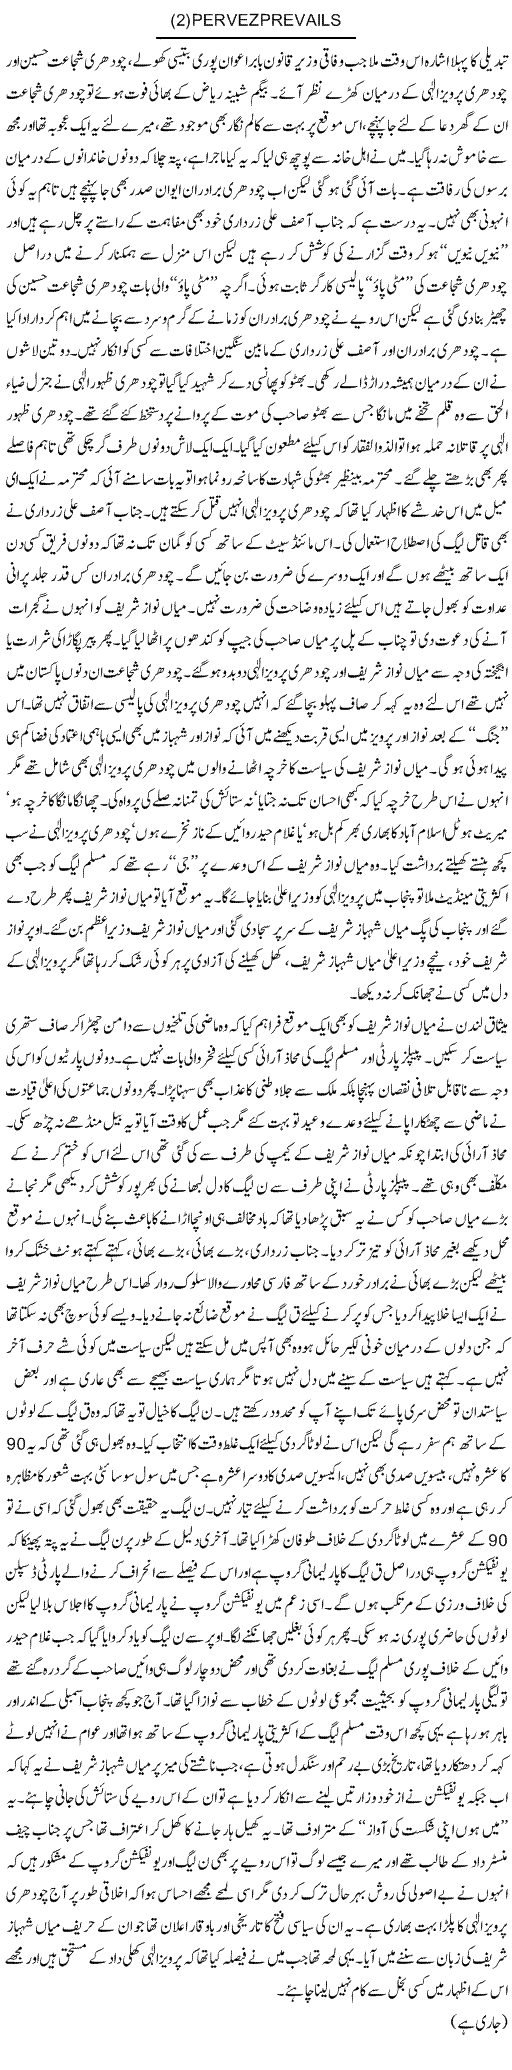 Pervez Prevails Express Column Asadullah Ghalib 17 March 2011